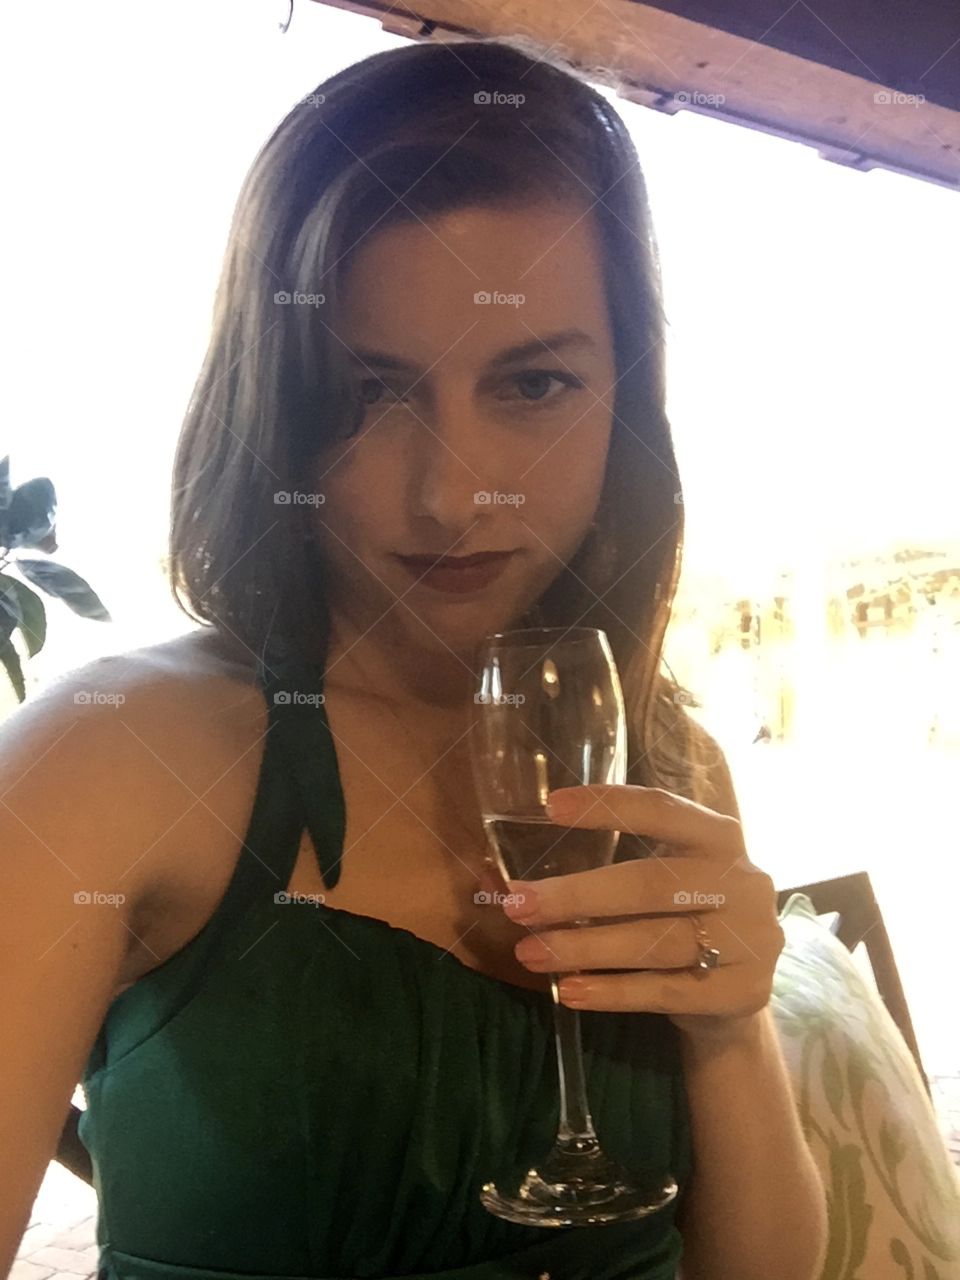 Enjoying wine at the wedding of my good friend. Cheers!